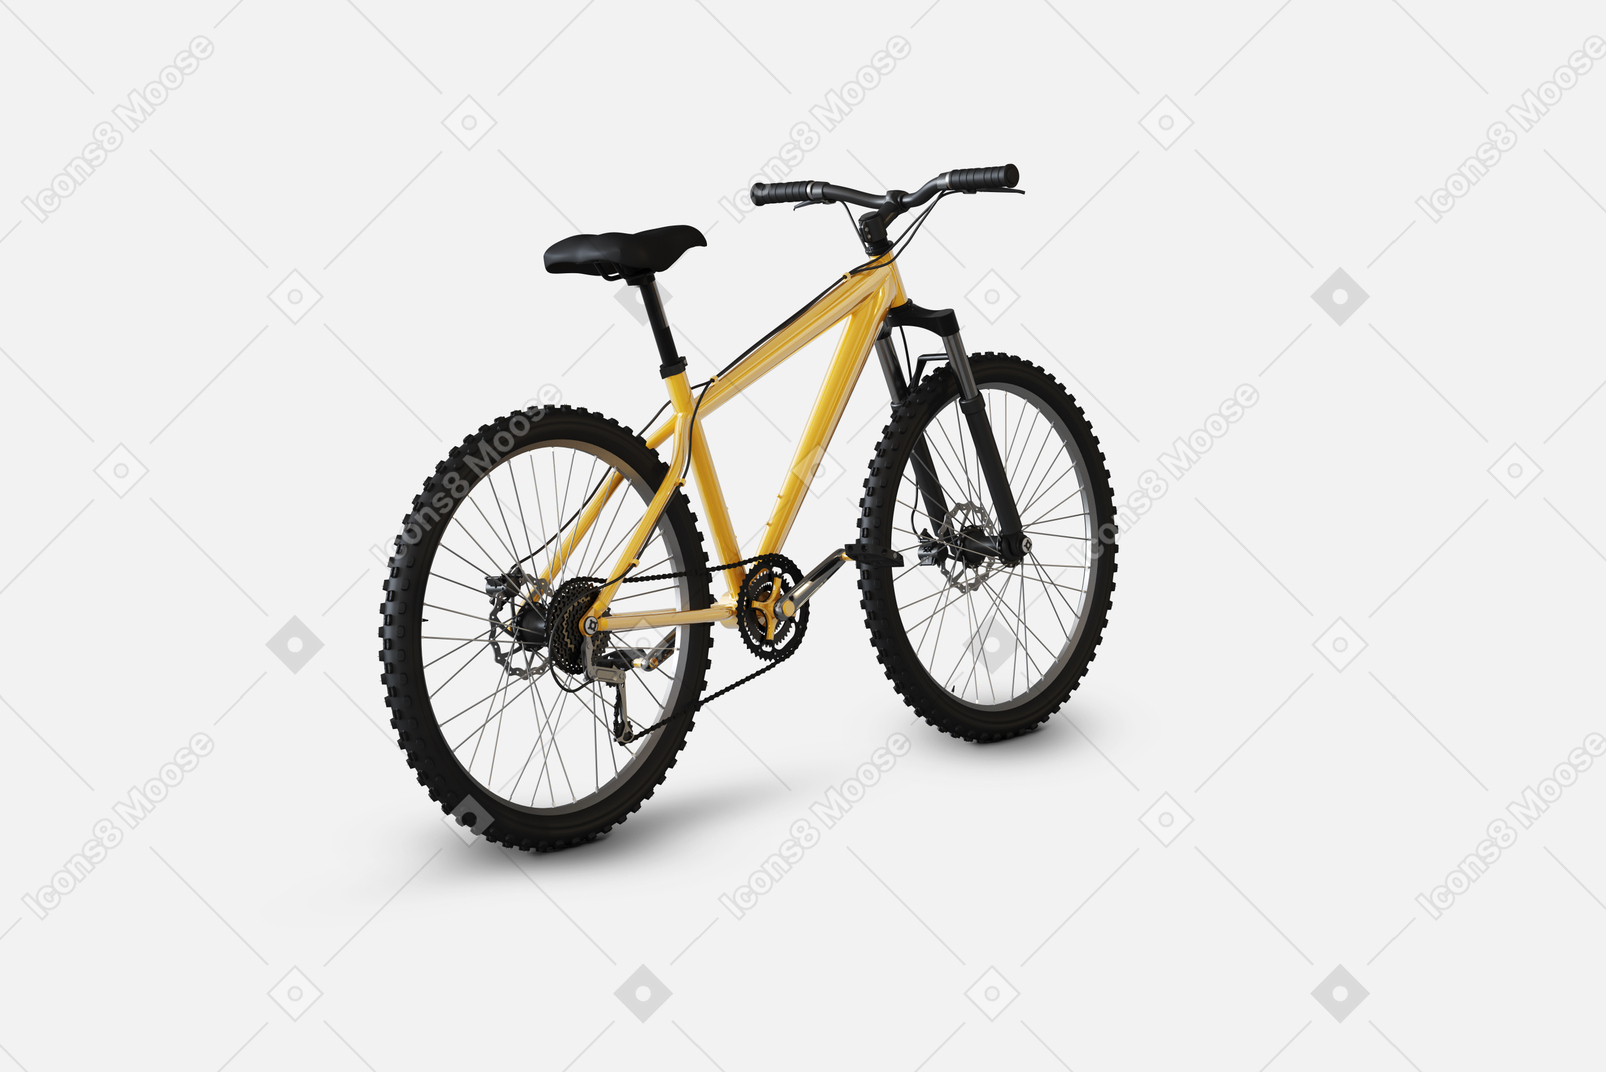 A sportive bike for a sportive person